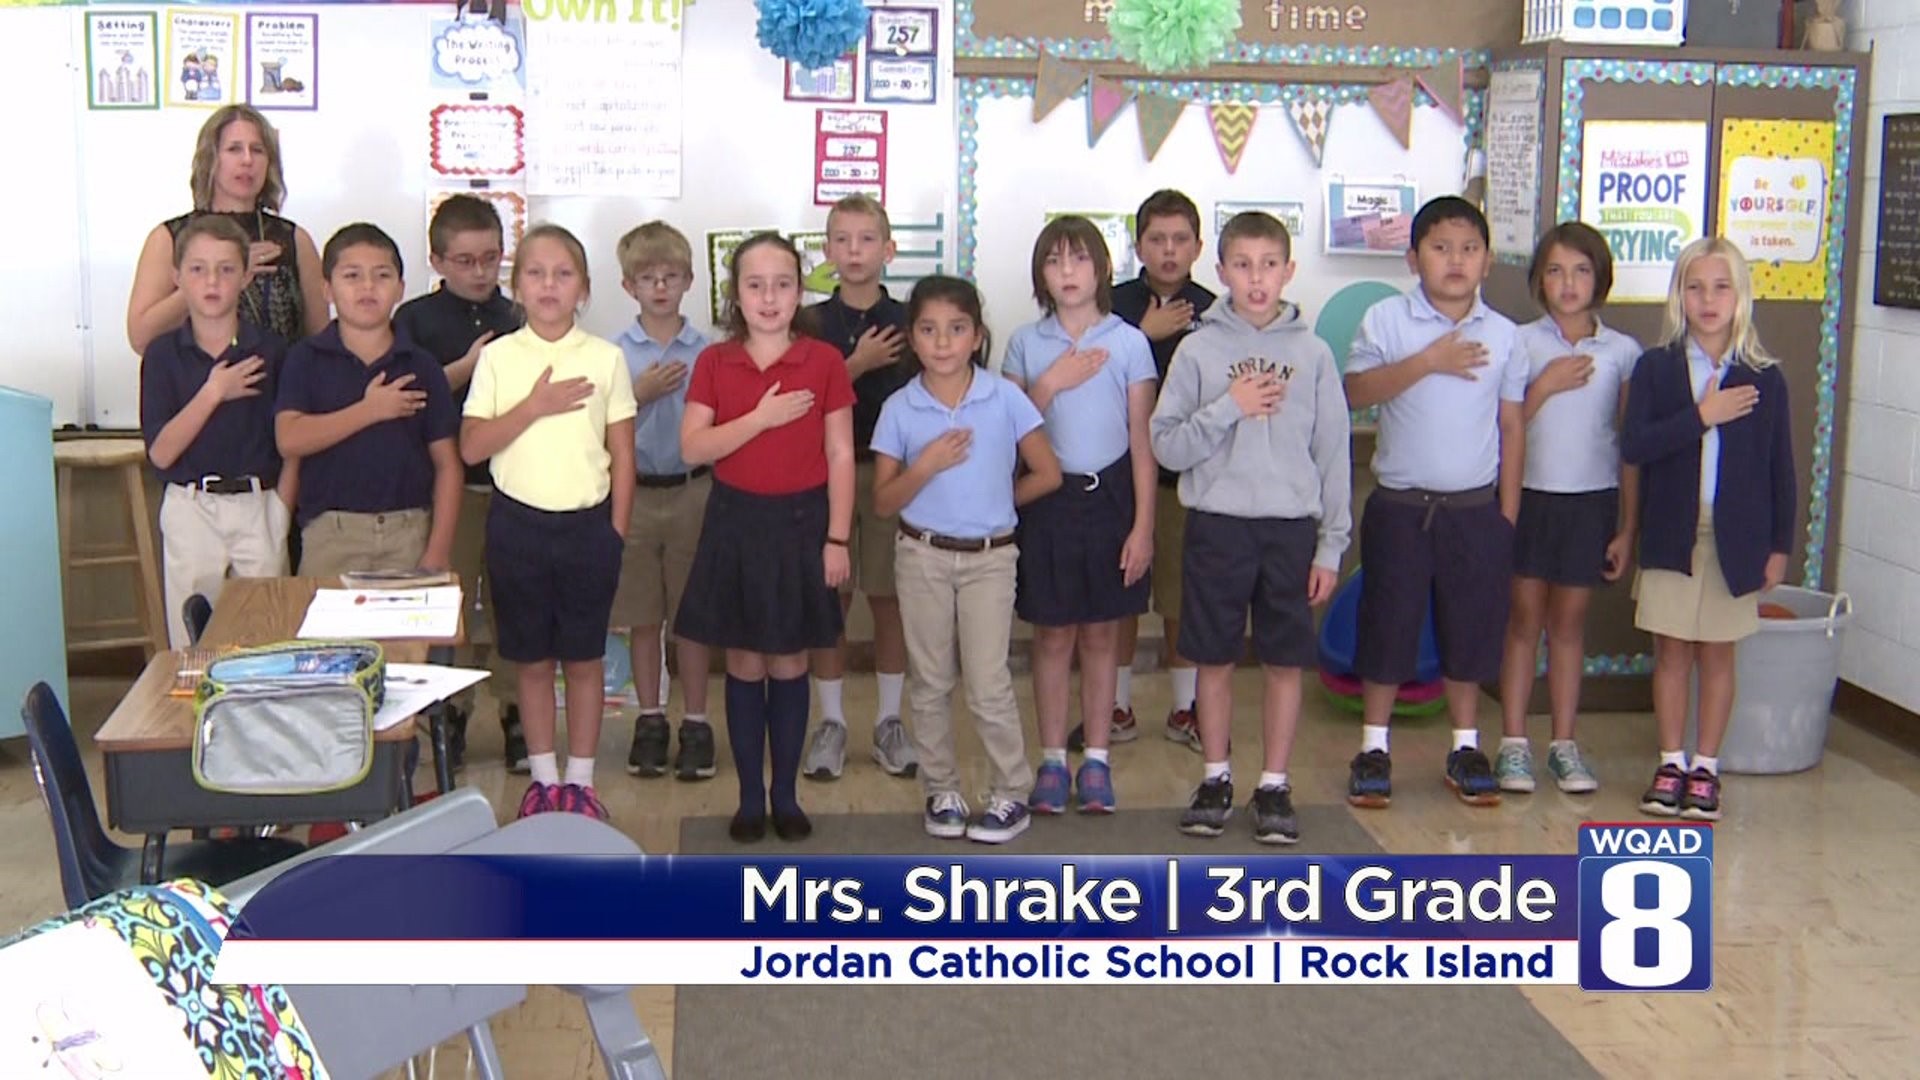 Mrs Shrake 3rd grade - Jordan